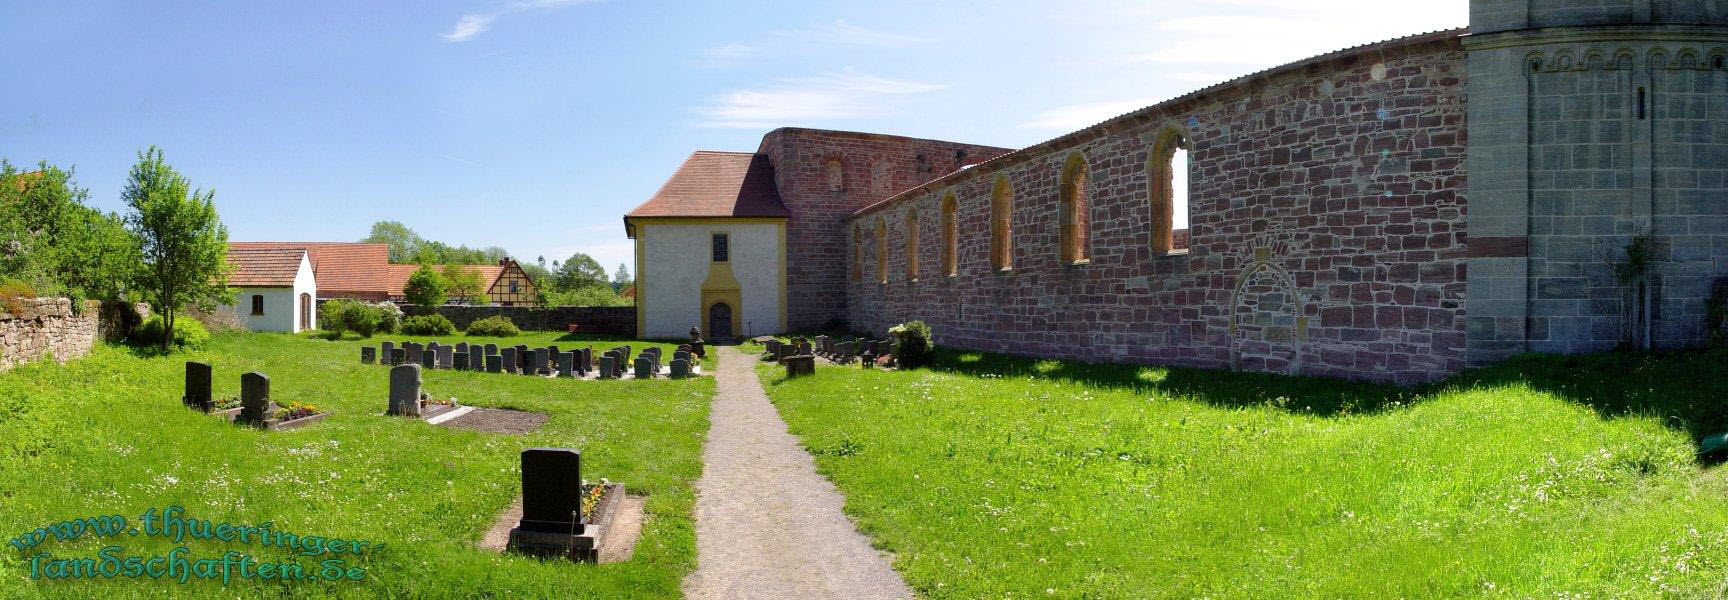 Friedhof mit Henneberger Kapelle